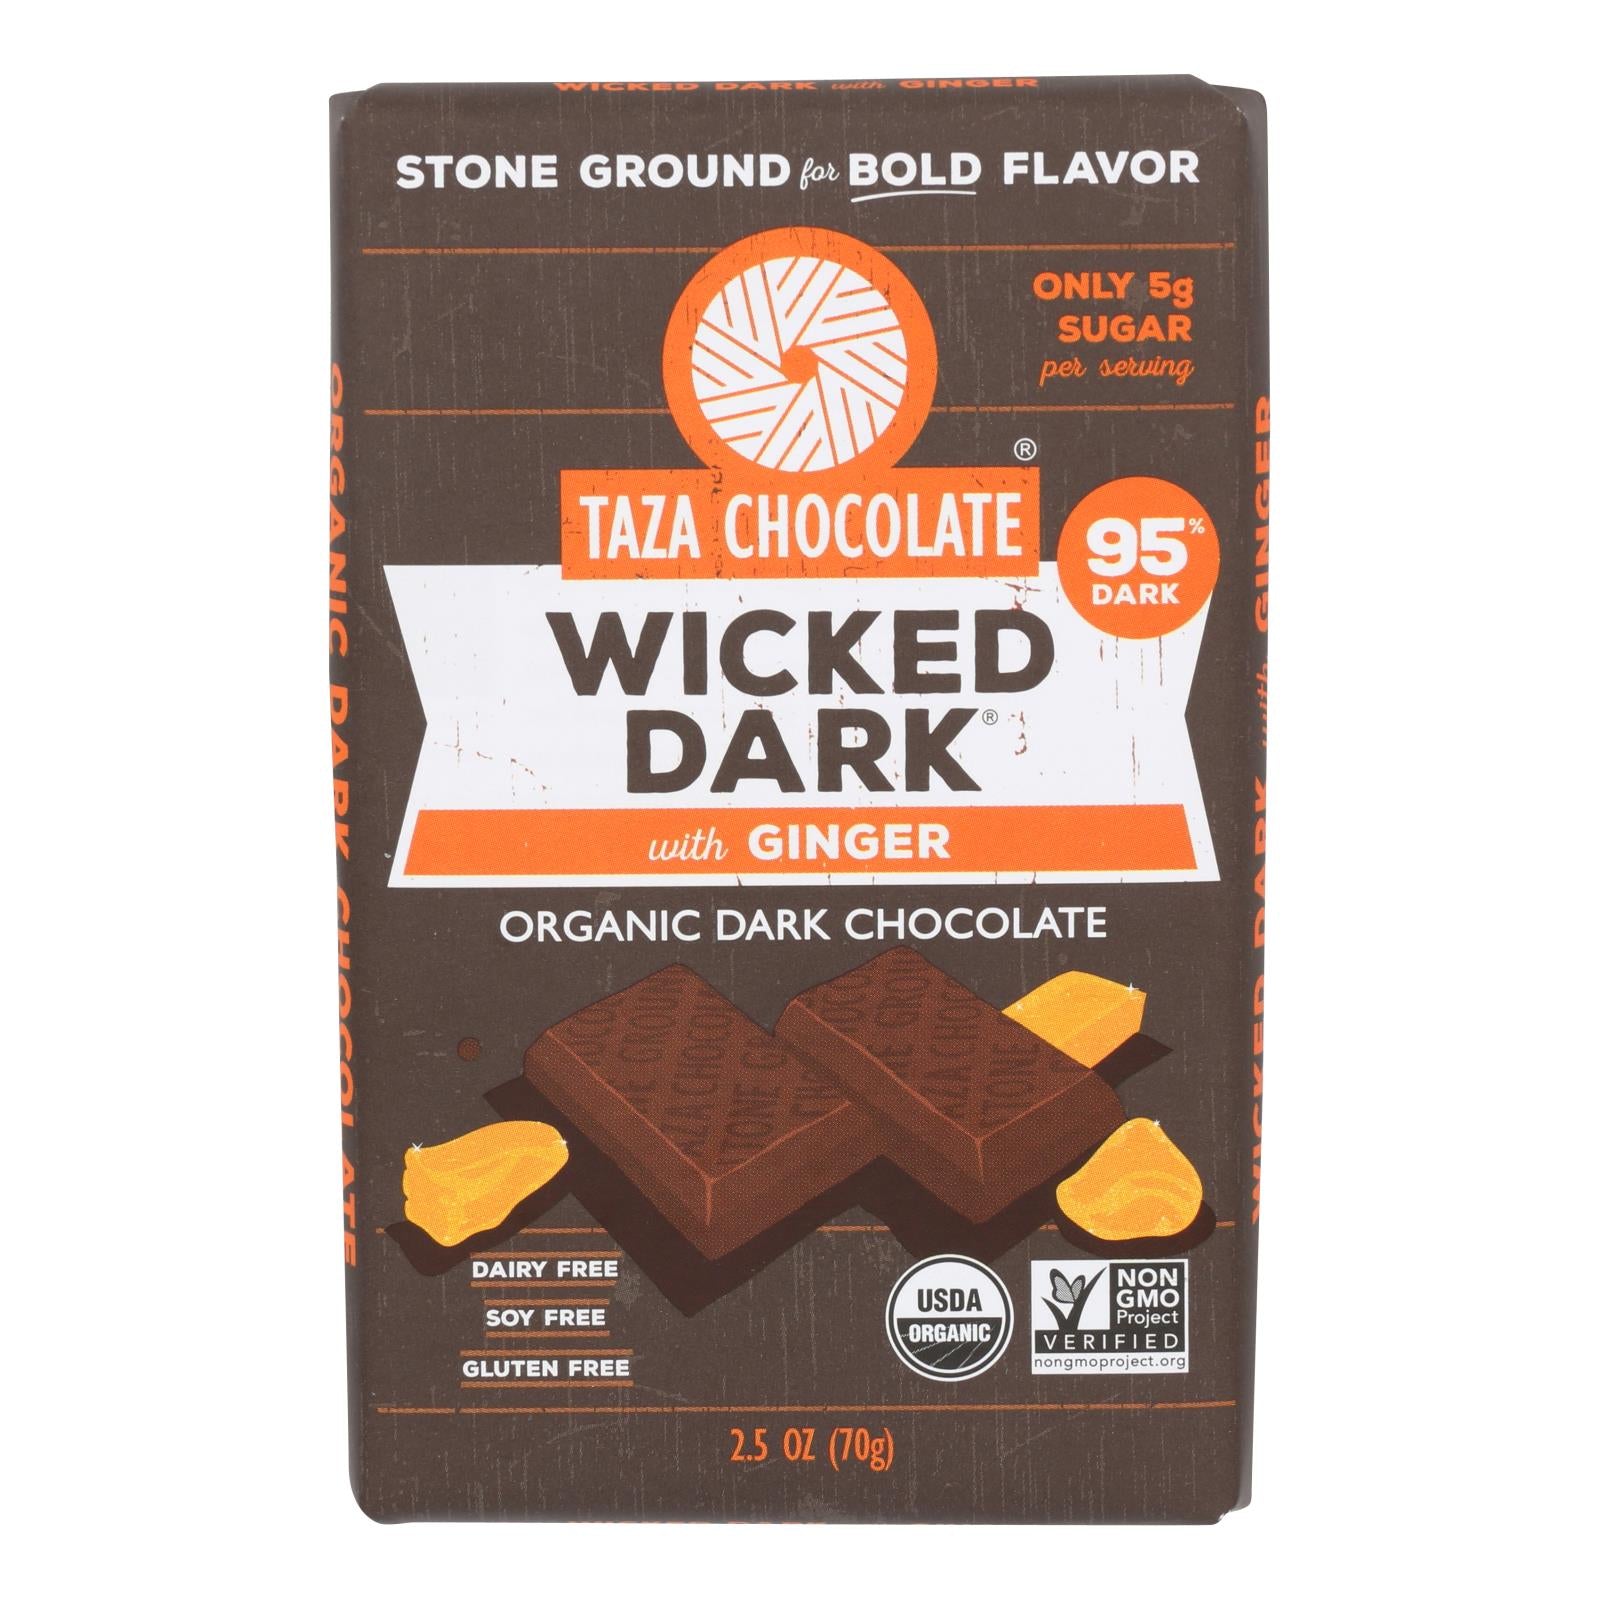 Taza Chocolate - Bar Wckd Dark Ginger 95% - Case Of 10 - 2.5 Oz | OnlyNaturals.us